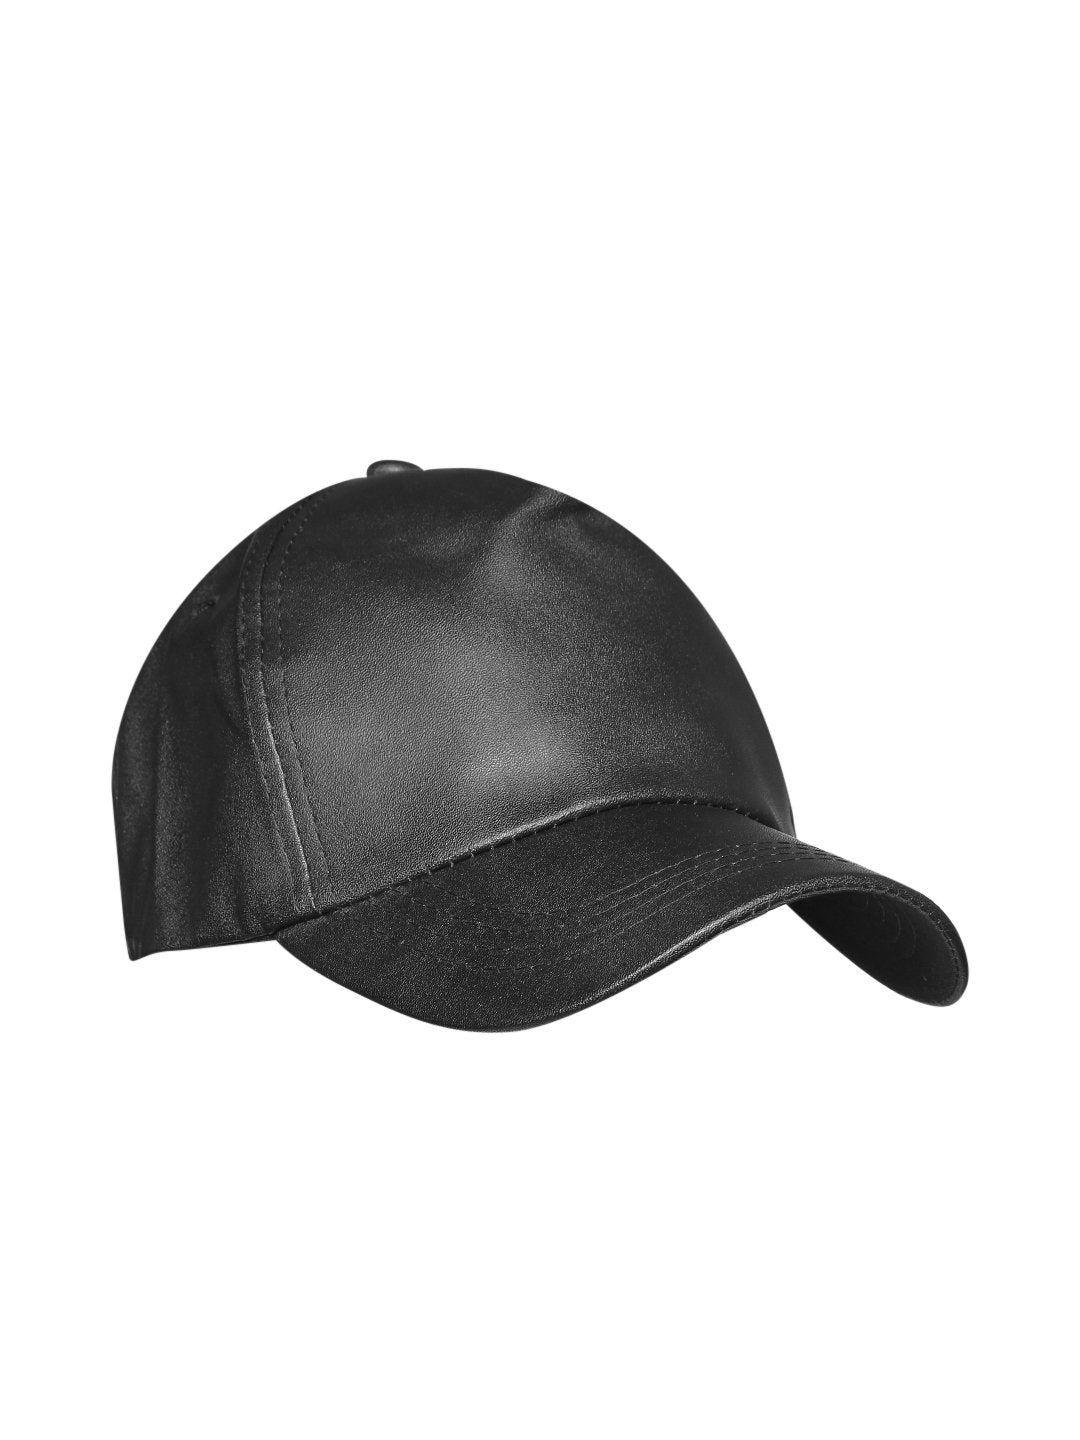 Lazy panda black synthetic leather baseball cap